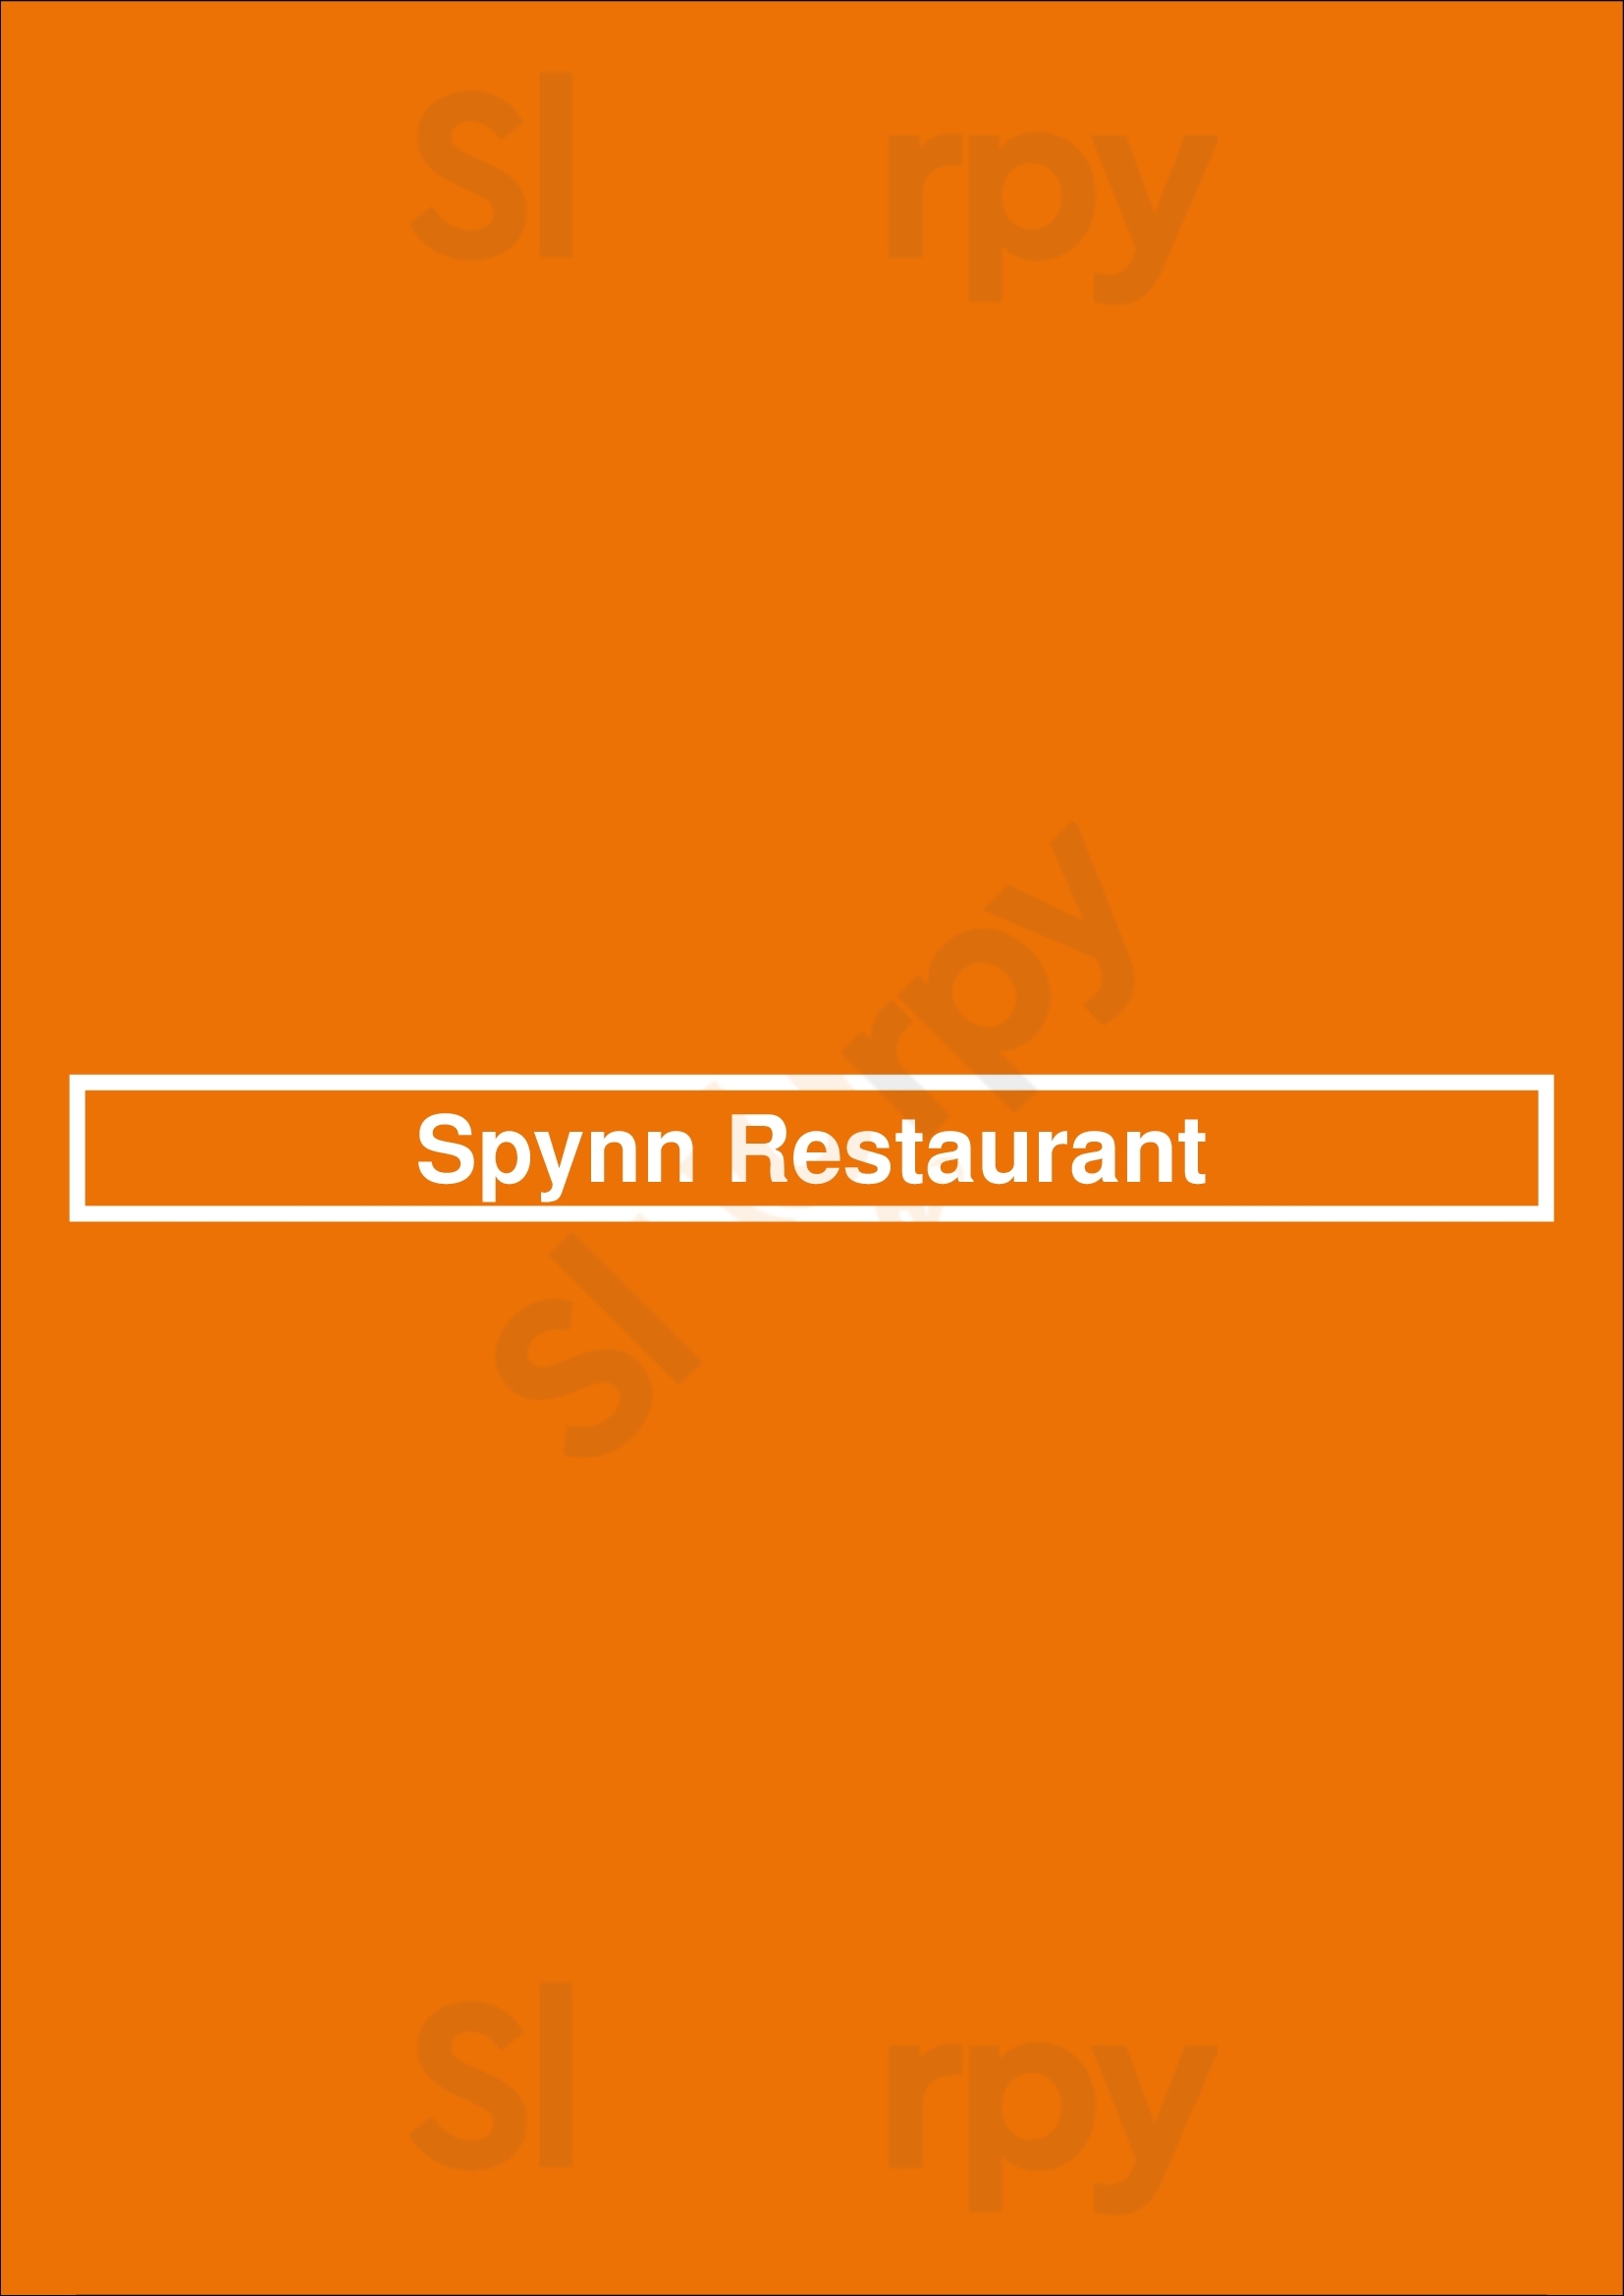 Spynn Restaurant Barrie Menu - 1